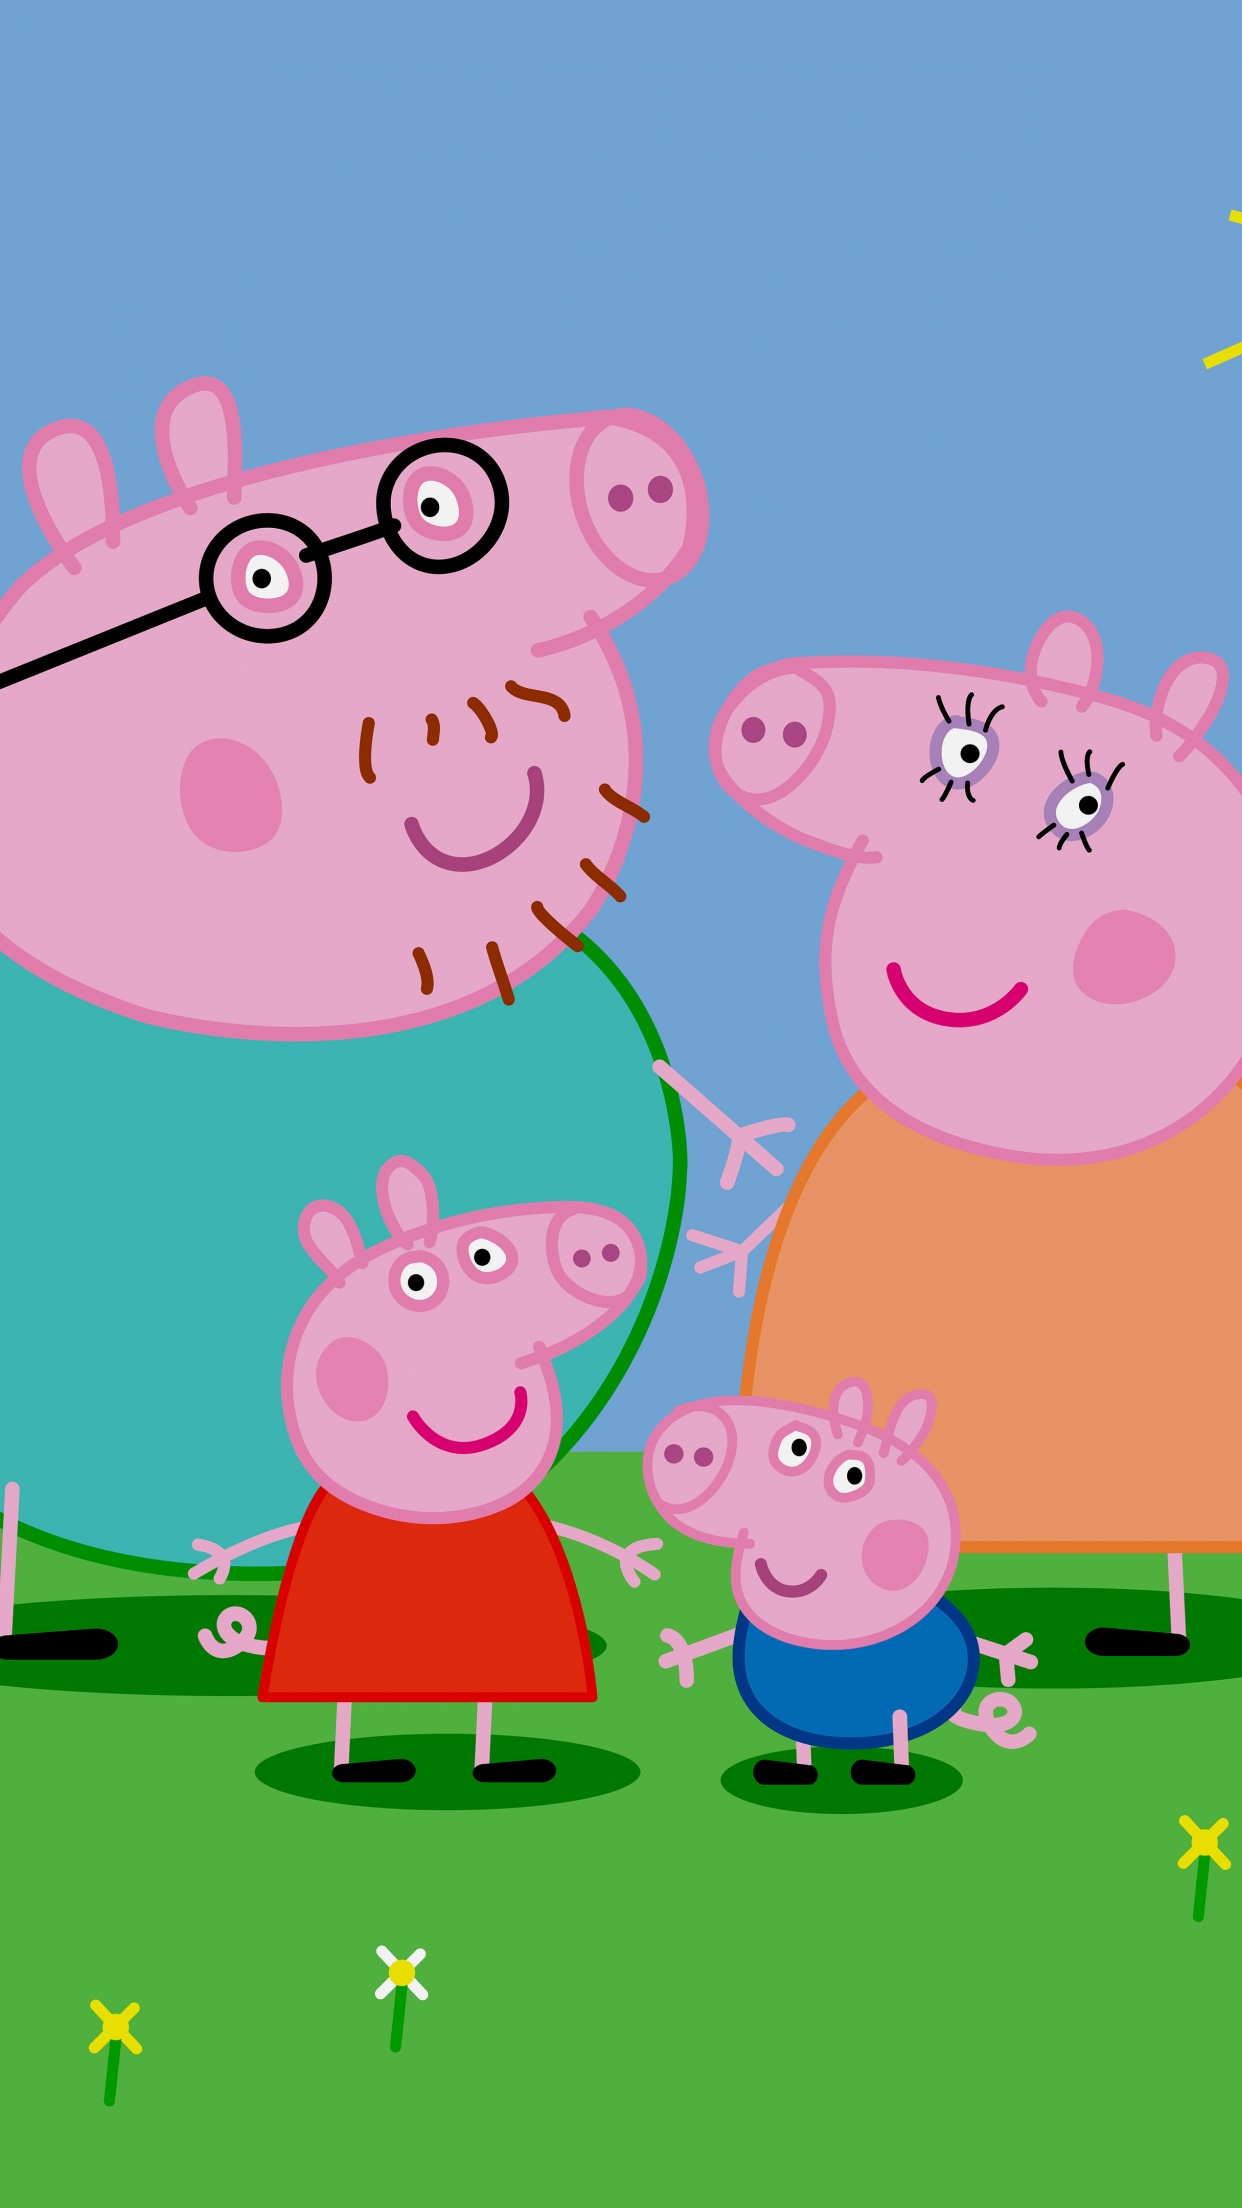 7 свинки пеппы. Свинка Пеппа. Свинка Пеппа семья. Картина Свинка Пеппа.